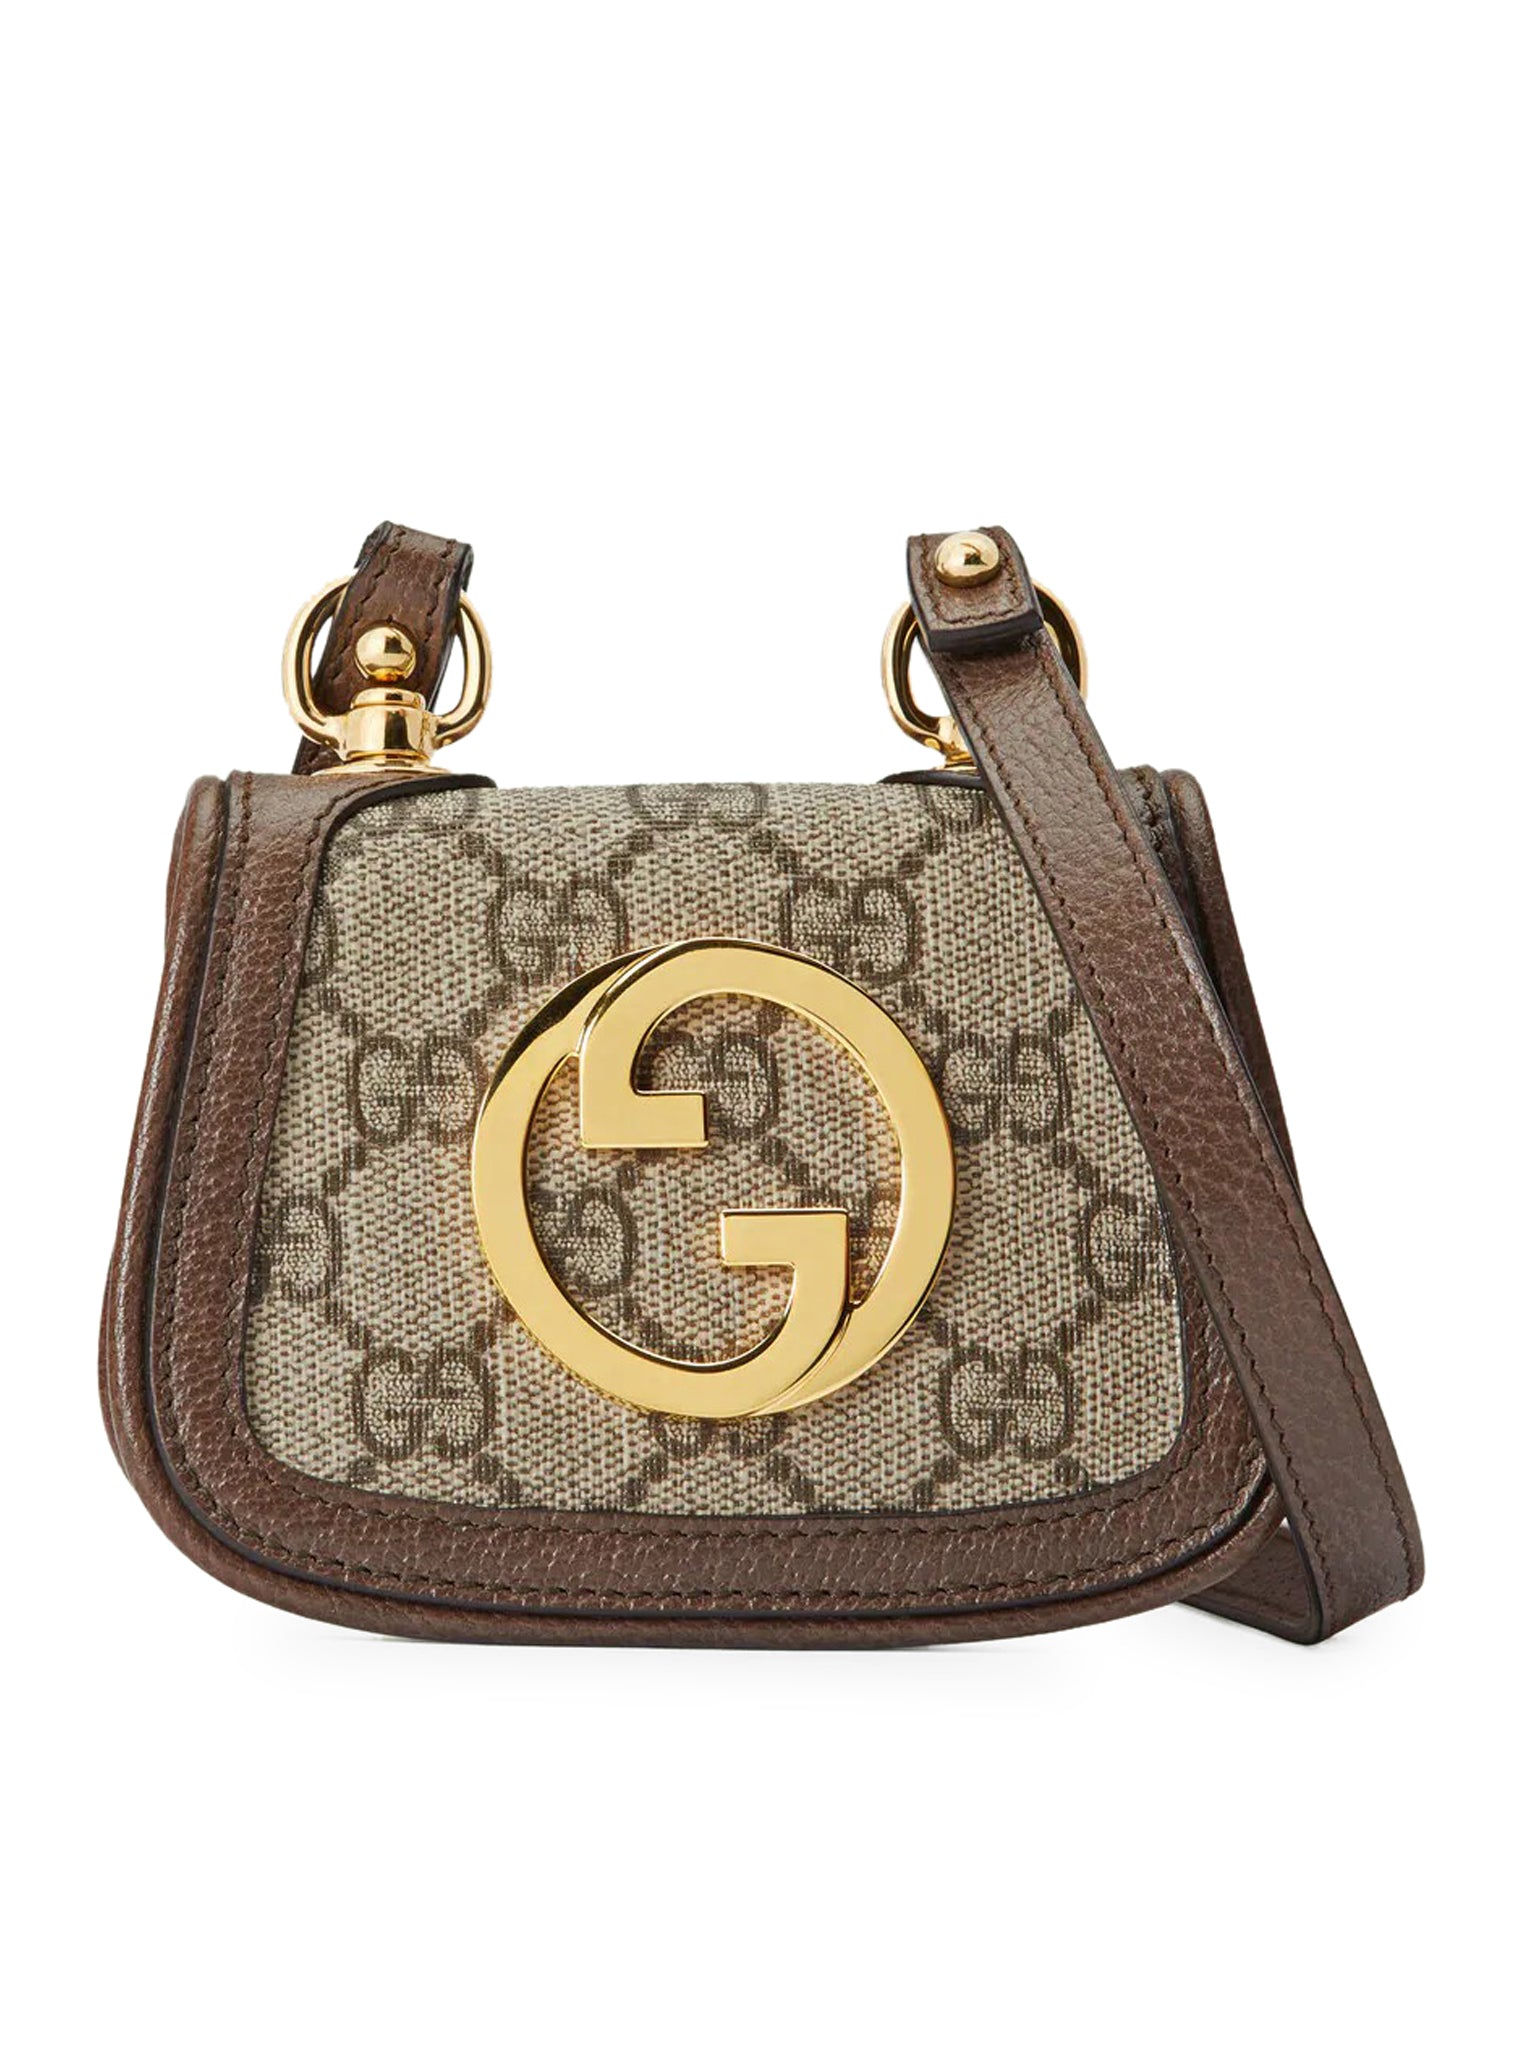 Gucci Blondie card holder with shoulder strap